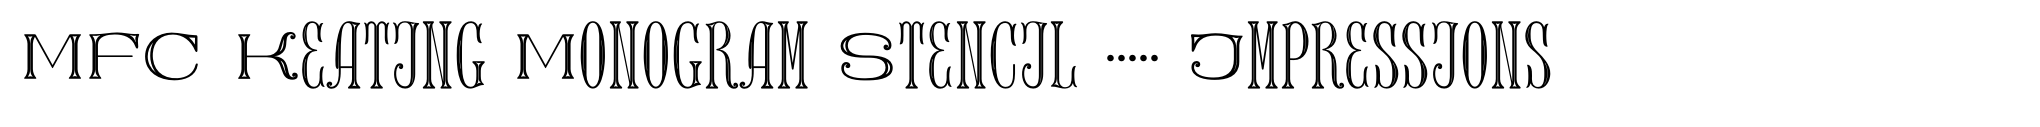 MFC Keating Monogram Stencil 25000 Impressions image